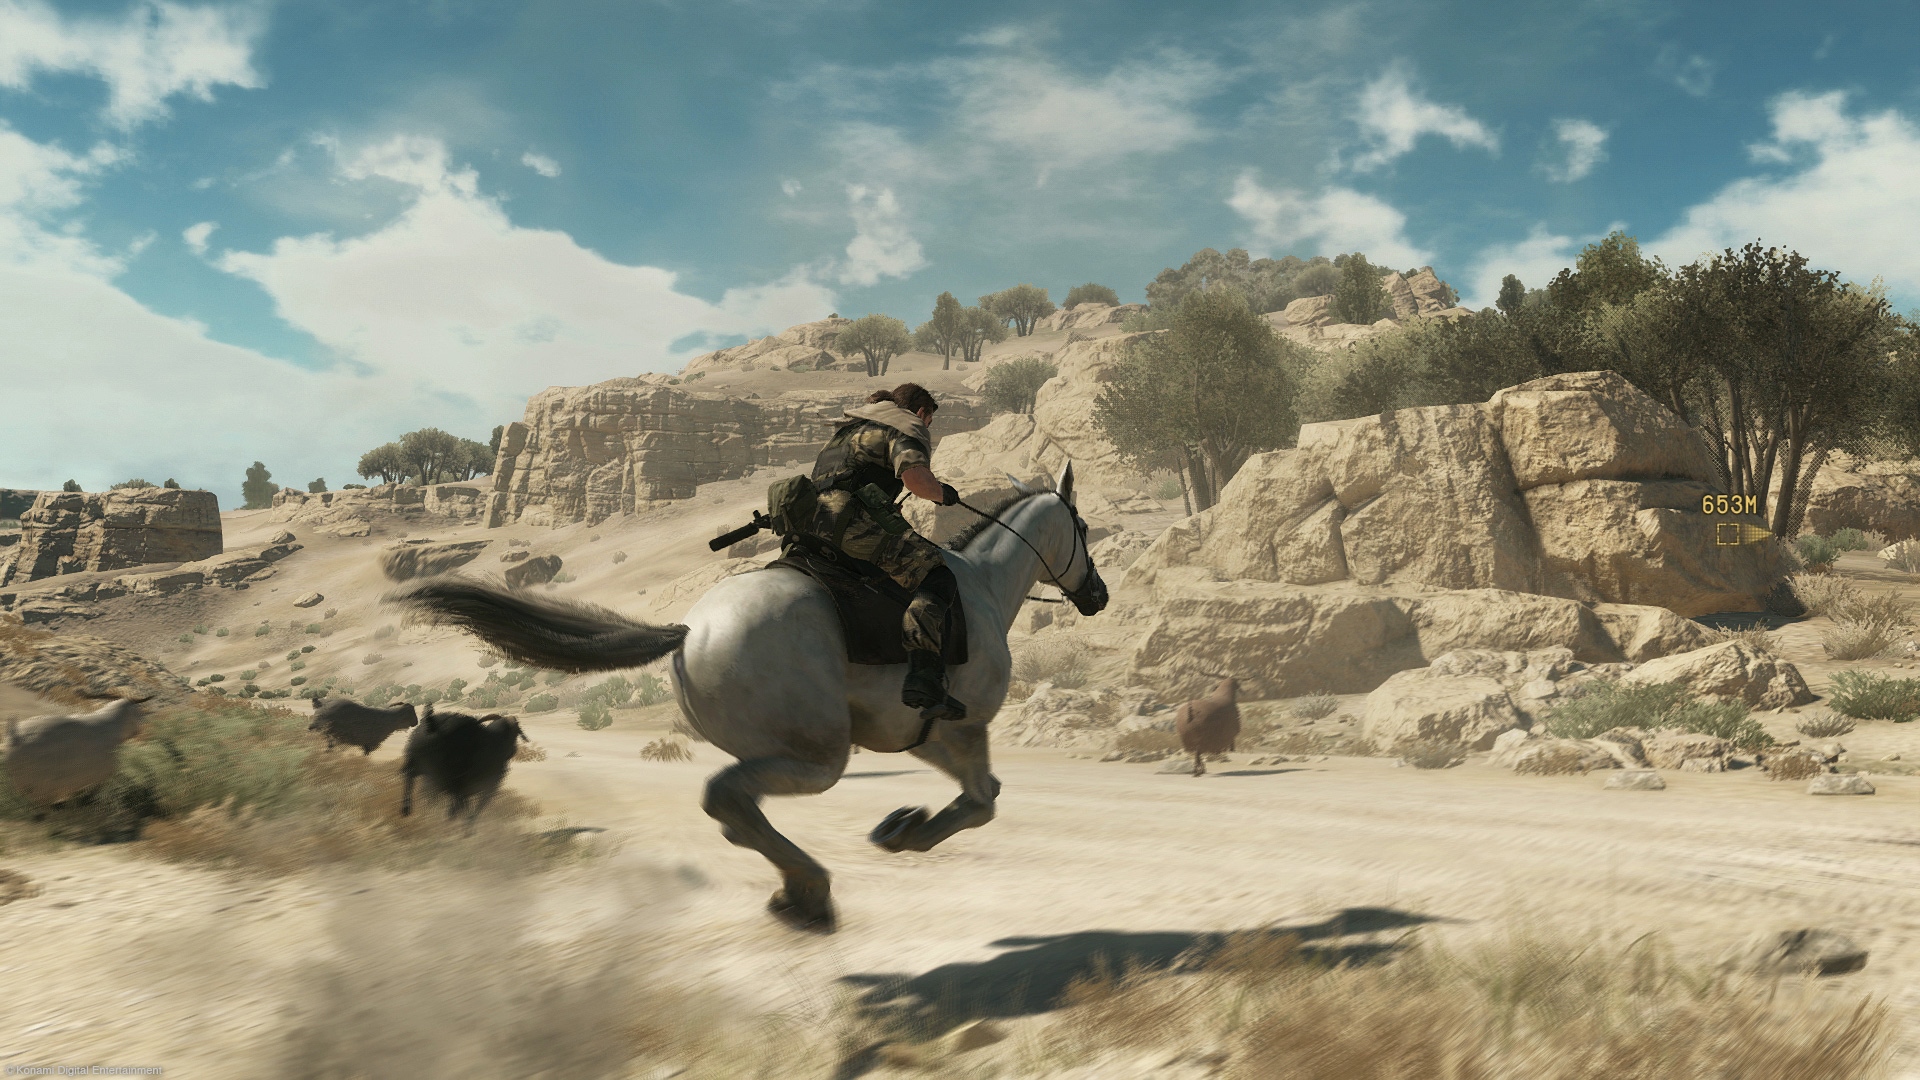 Metal Gear Solid V: The Phantom Pain Ke do Afganistanu, tak jedine na koni, akurt tu troka vyzer tak, akoby ho animovali poda klokana.